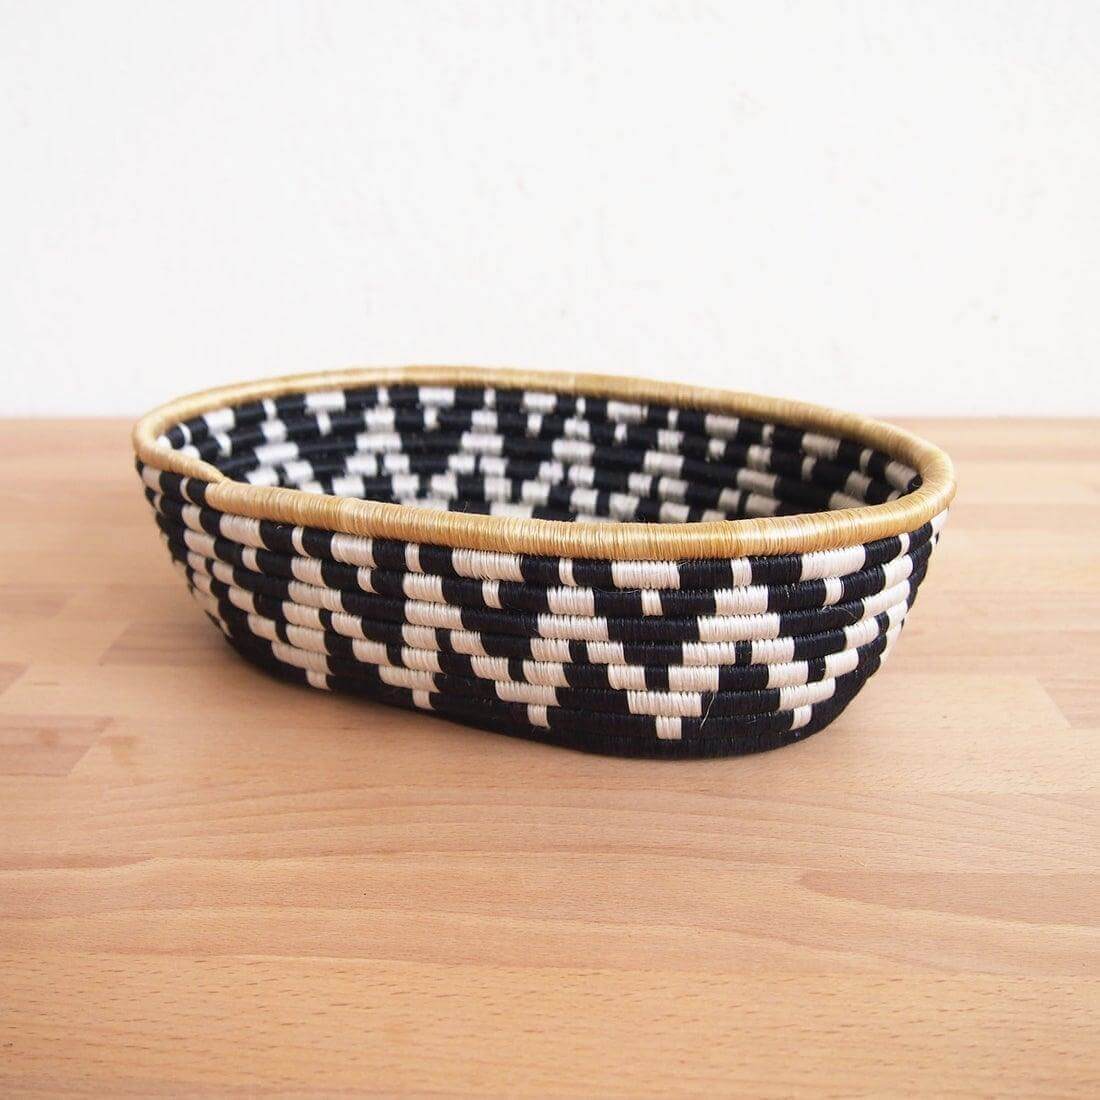 Woven bread basket handmade by Rwandan artisans